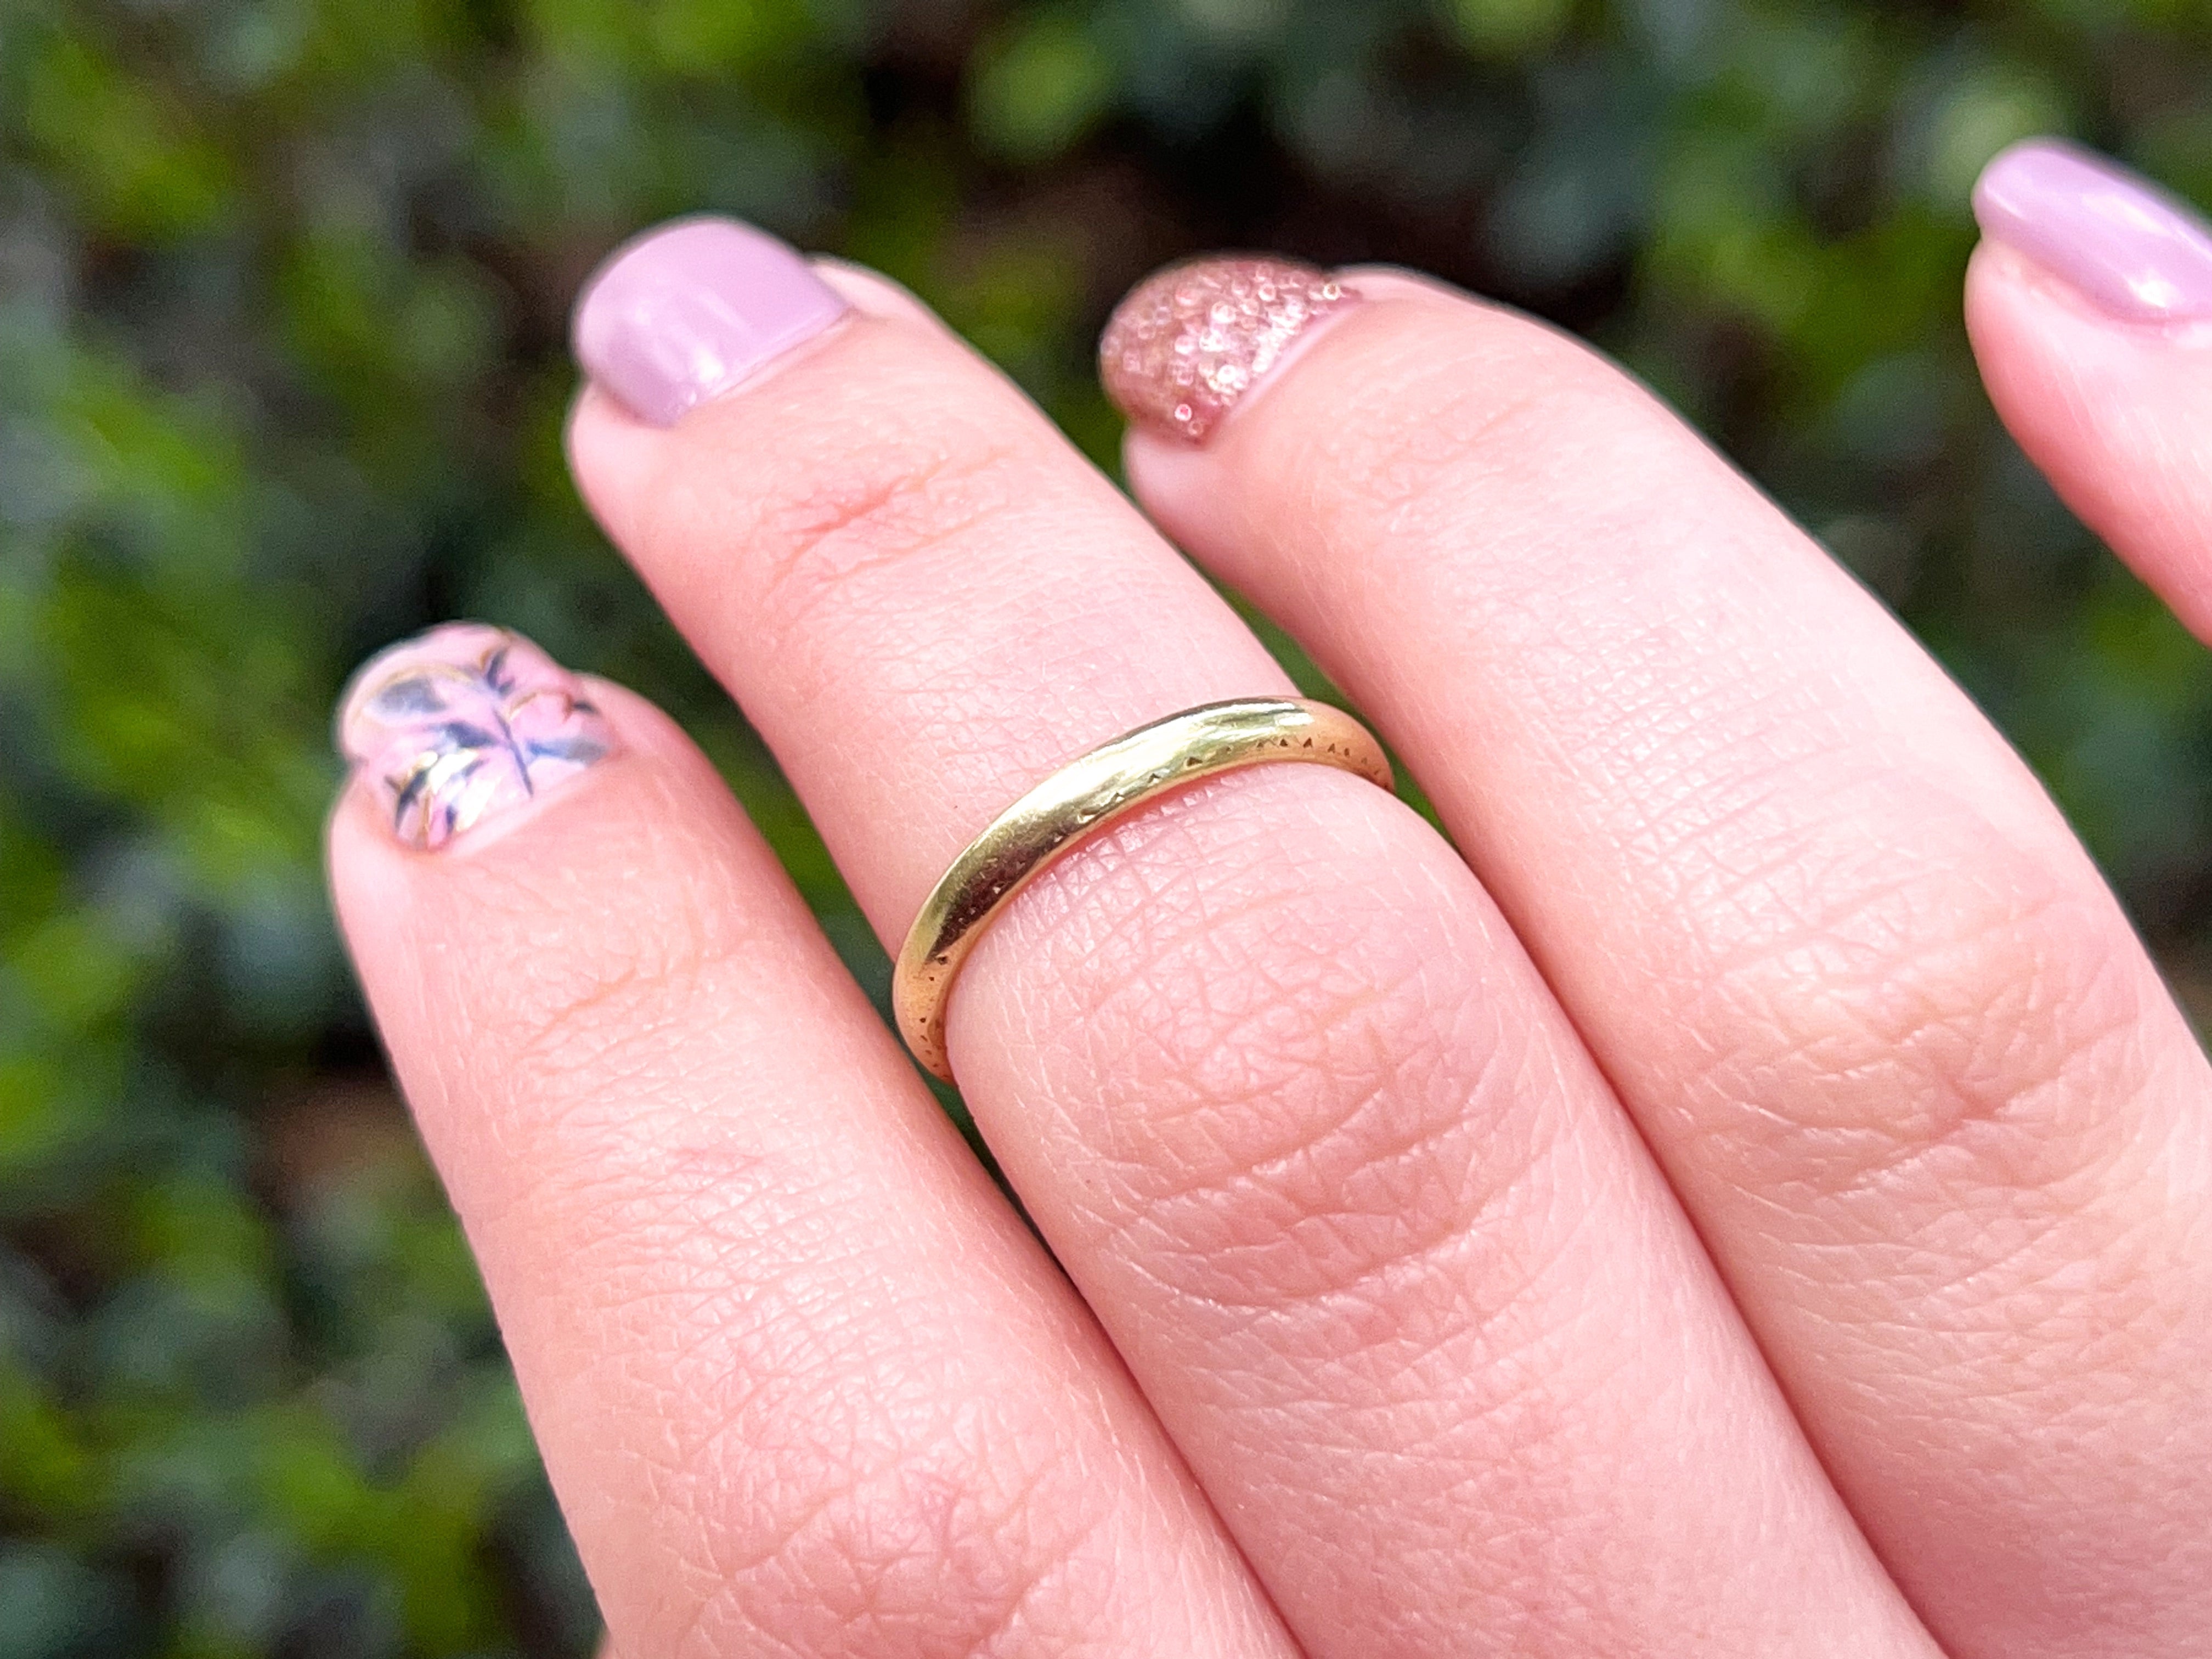 Antique 18K Gold Wedding Ring, Size 5.25